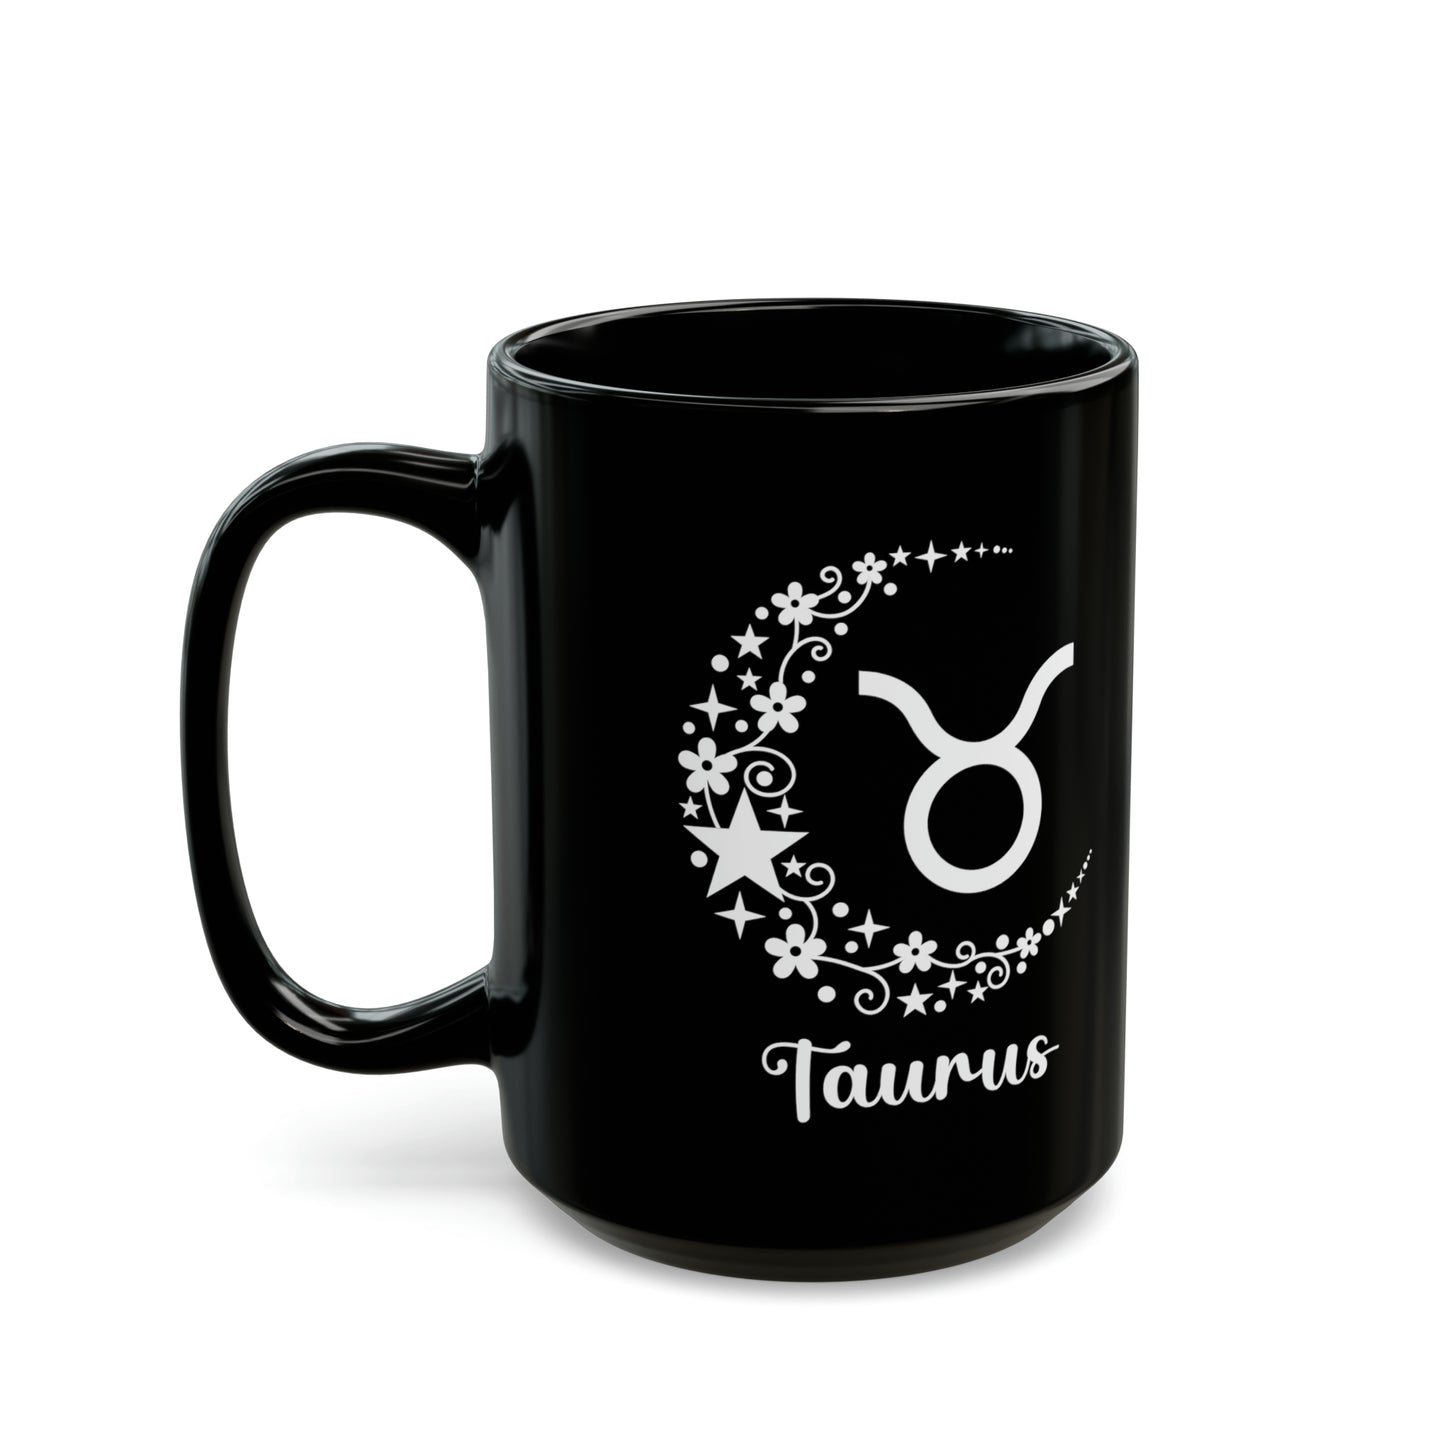 Taurus crescent moon mug